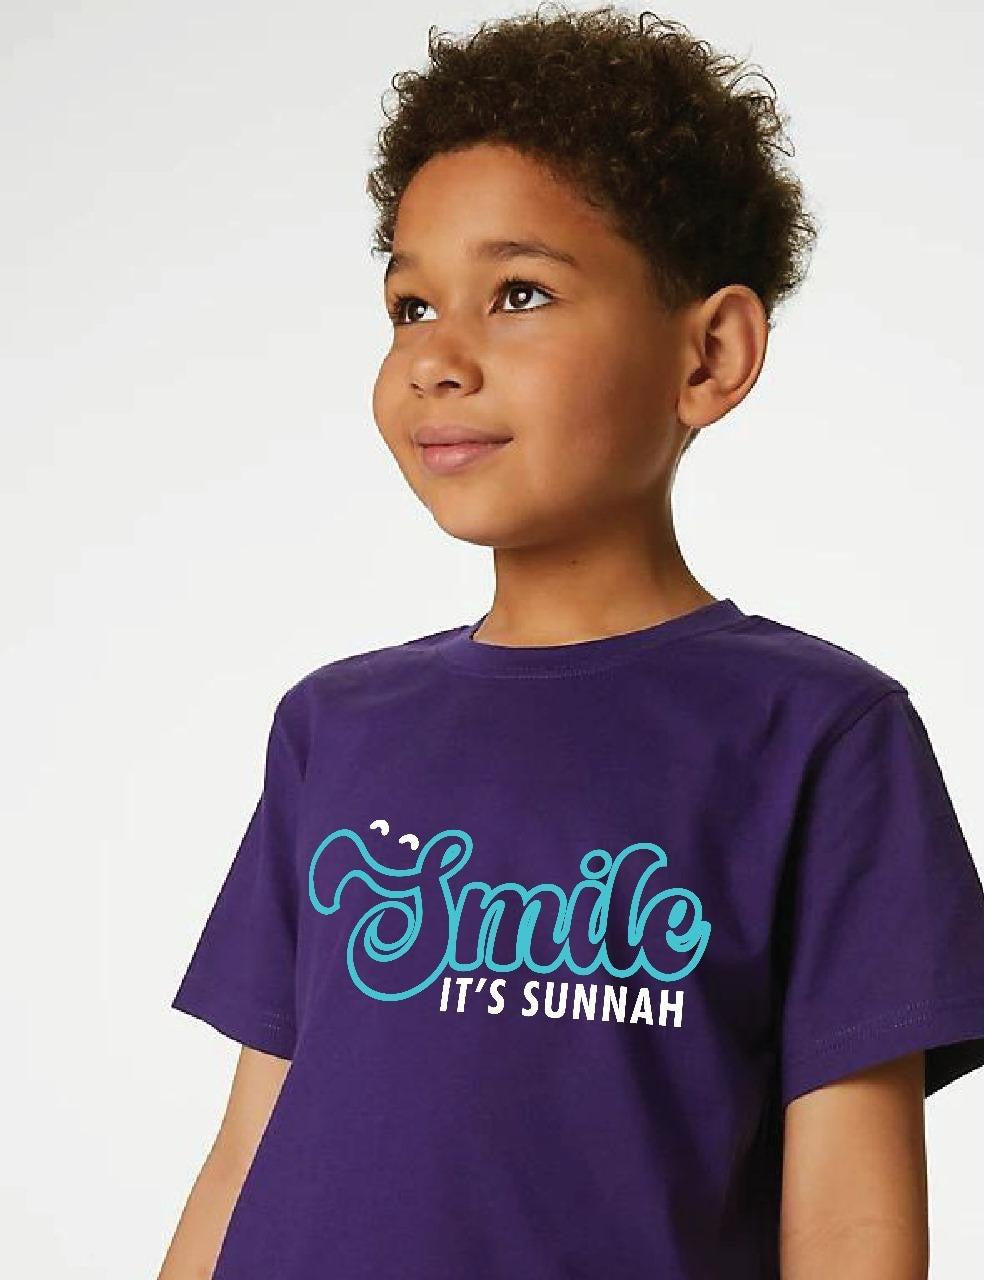 (NEW) Imanhood Kids T-Shirt - Smile It's Sunnah Purple